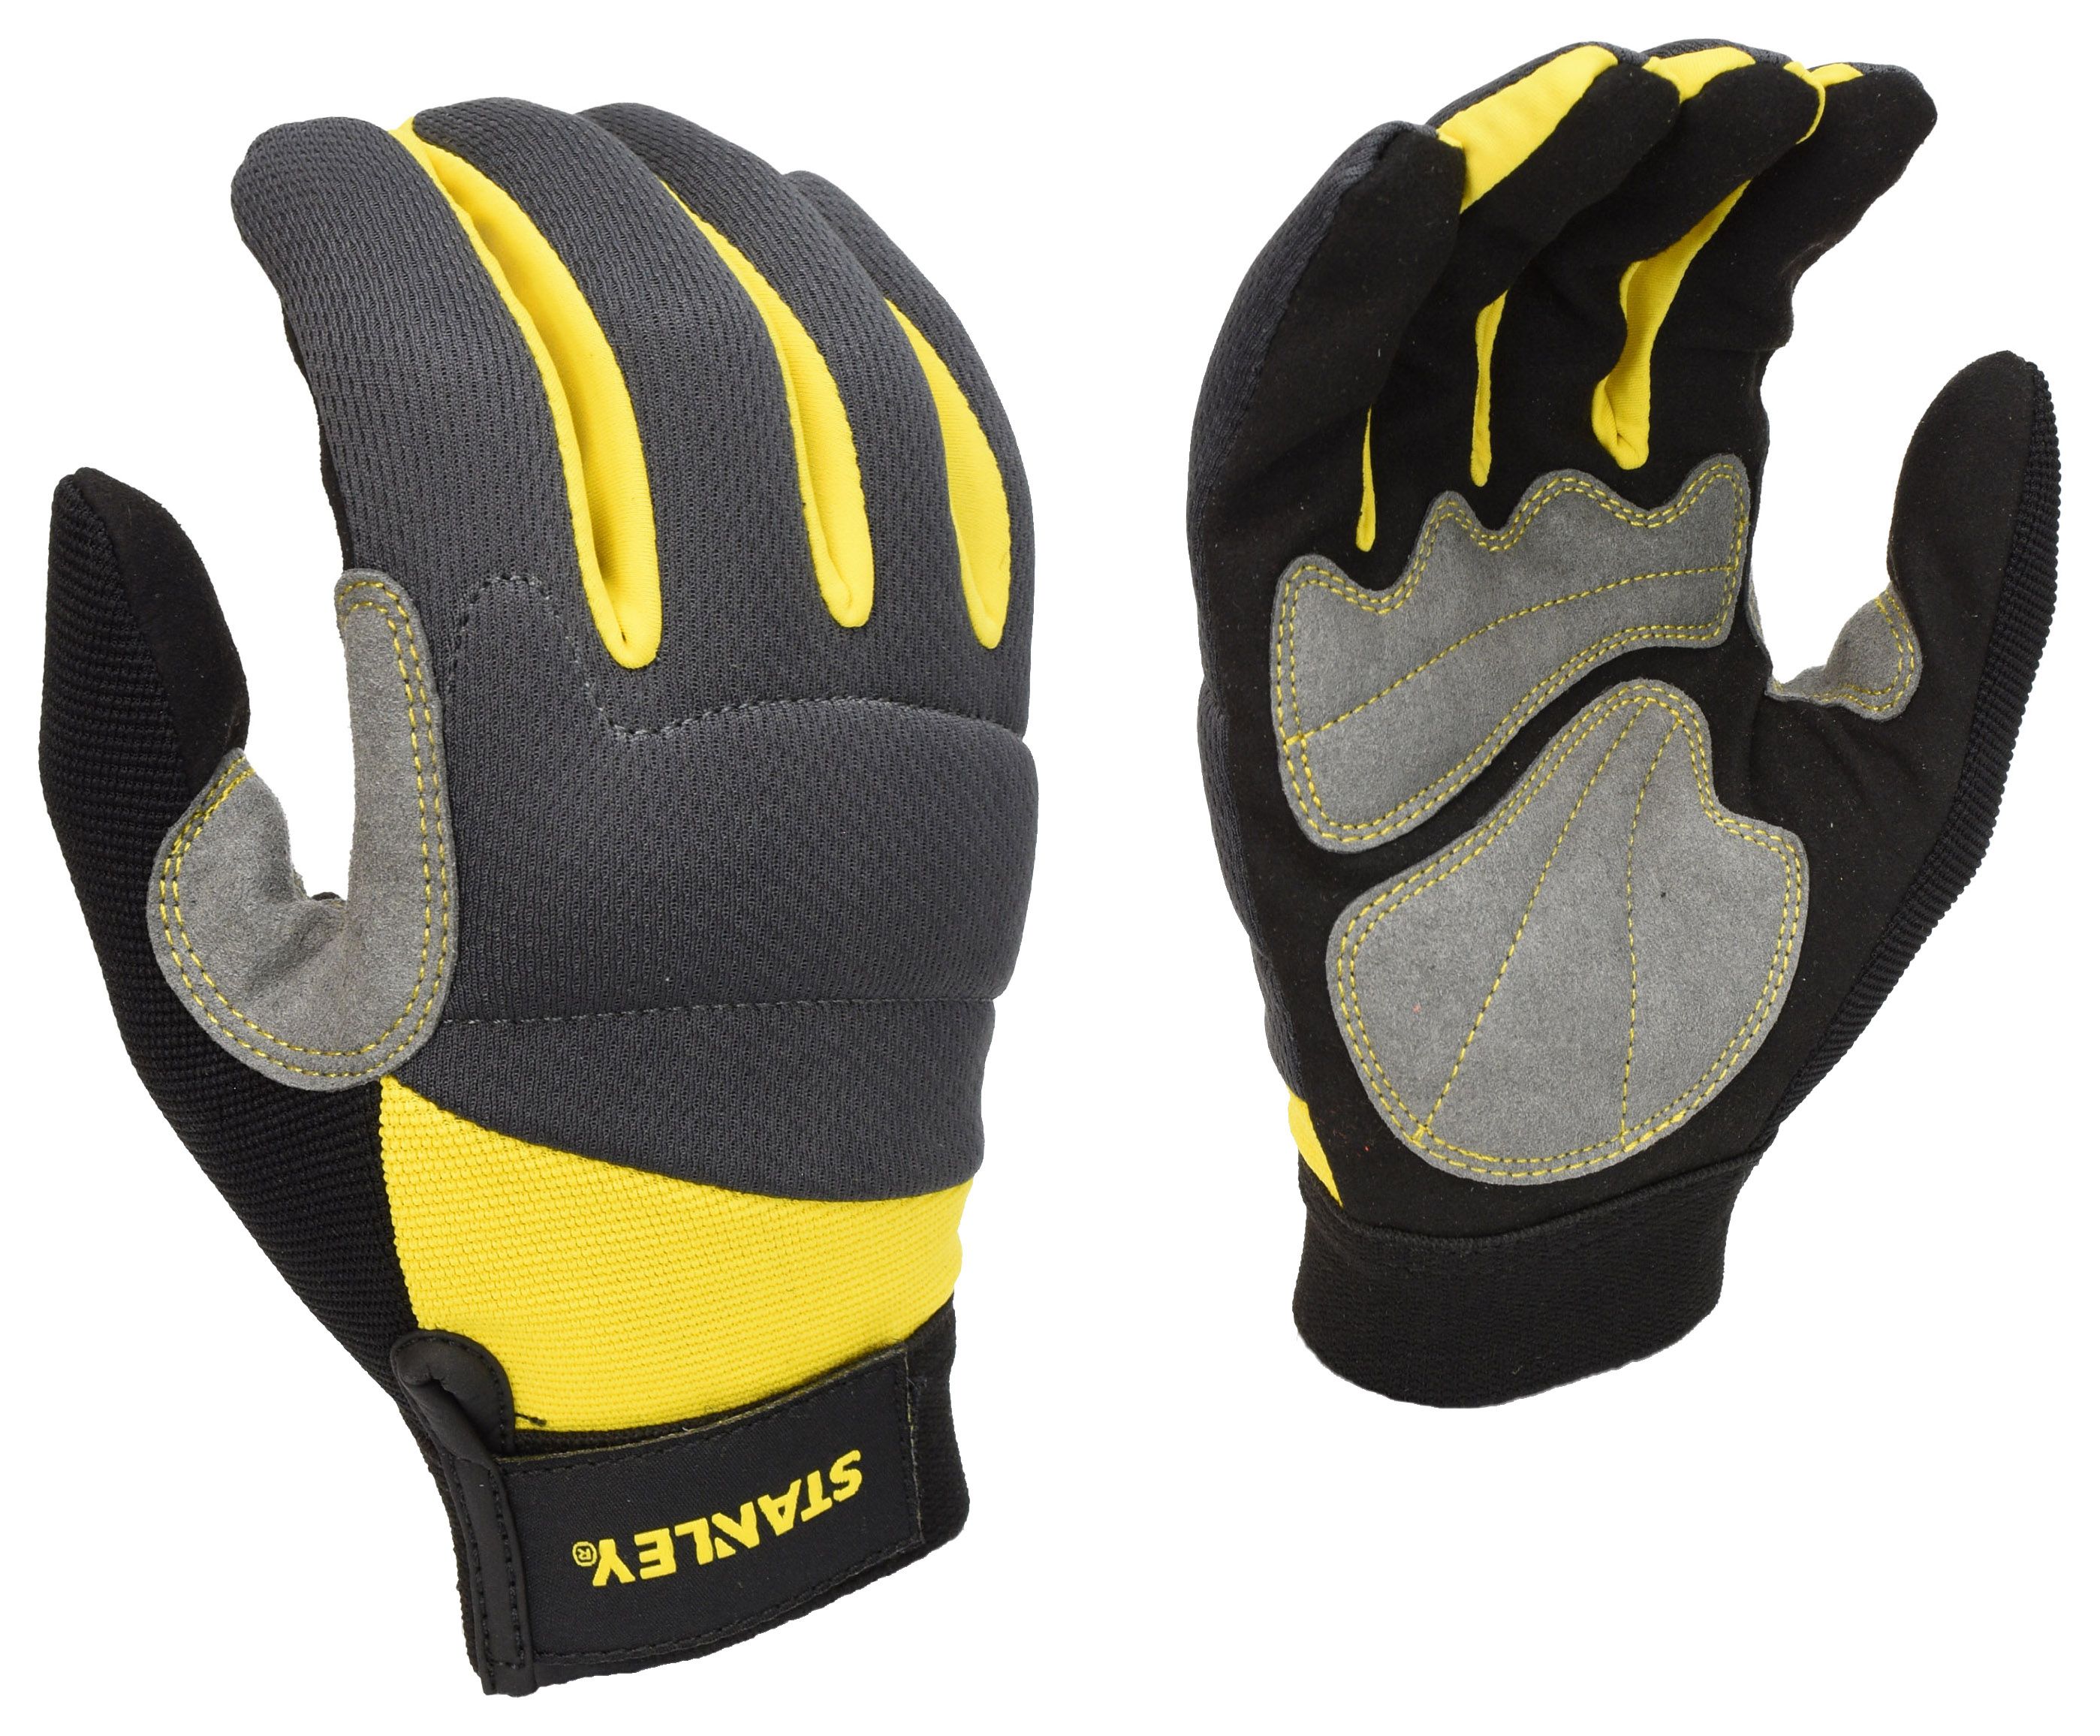 Stanley SY660L Performance Yellow & Black Glove - Size L